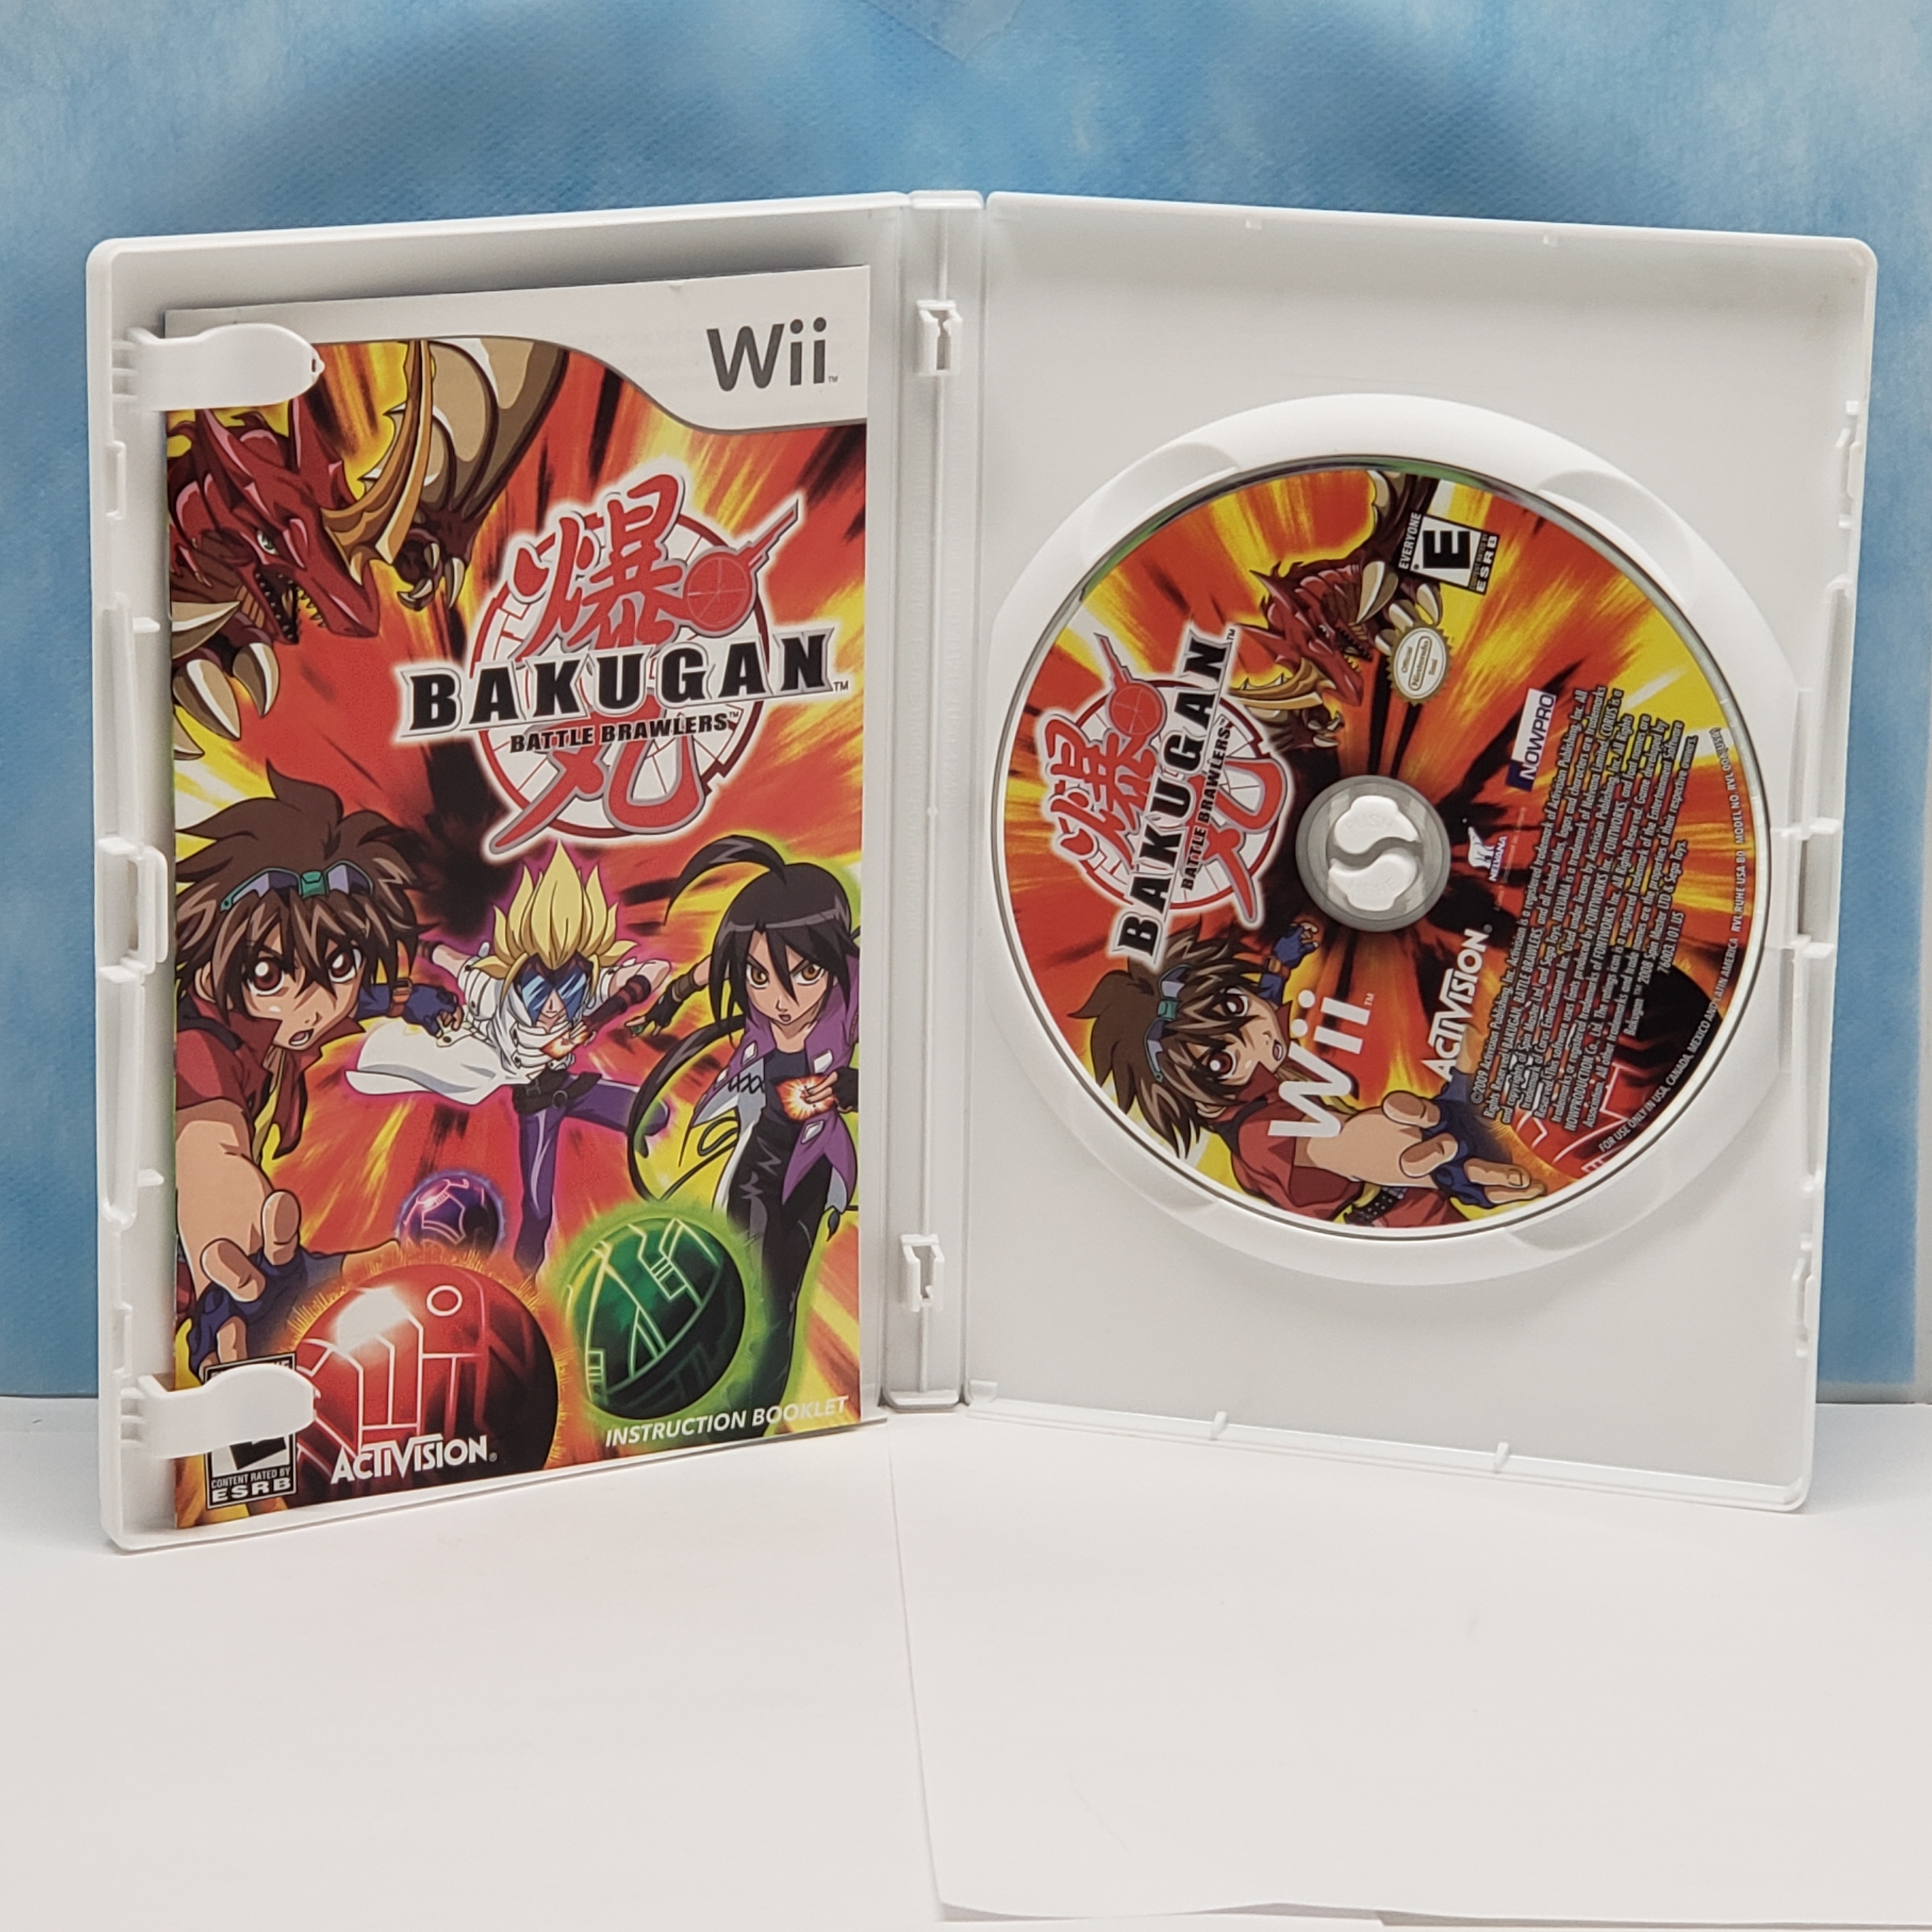 Bakugan Battle Brawlers Video Game for Wii - CIB - Used